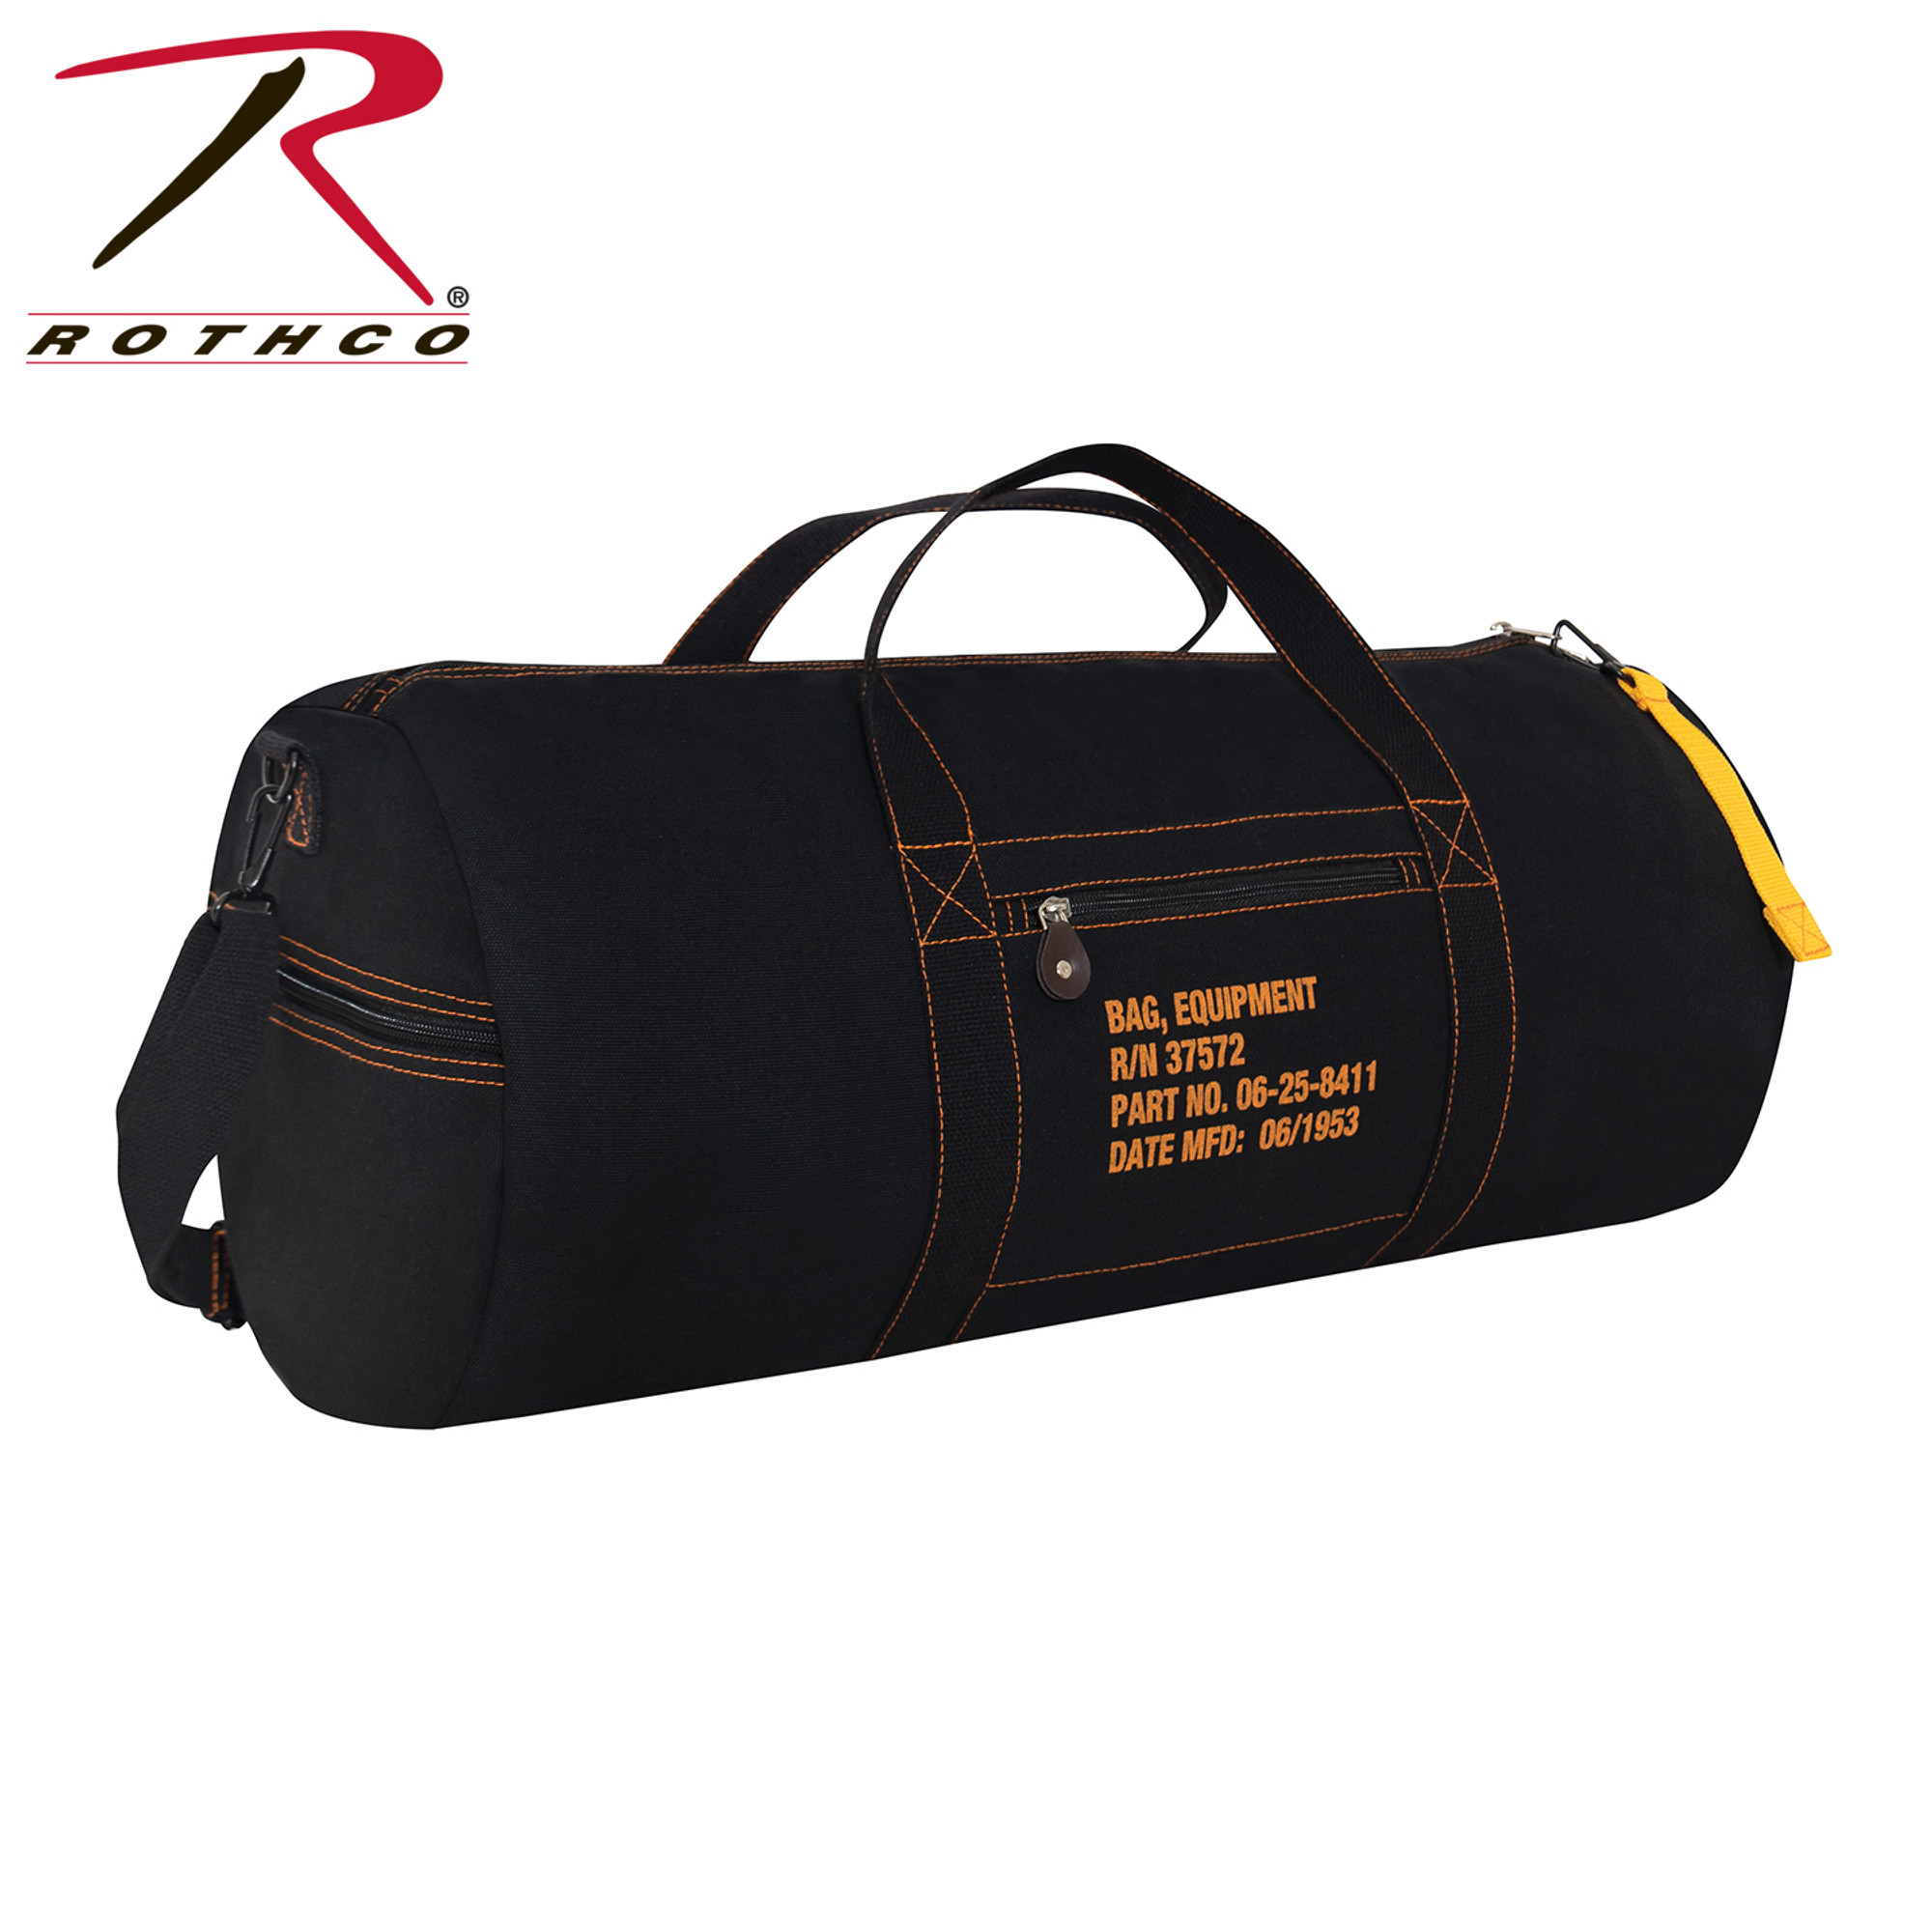 Rothco Canvas Equipment Bag - 24 Inches - Black